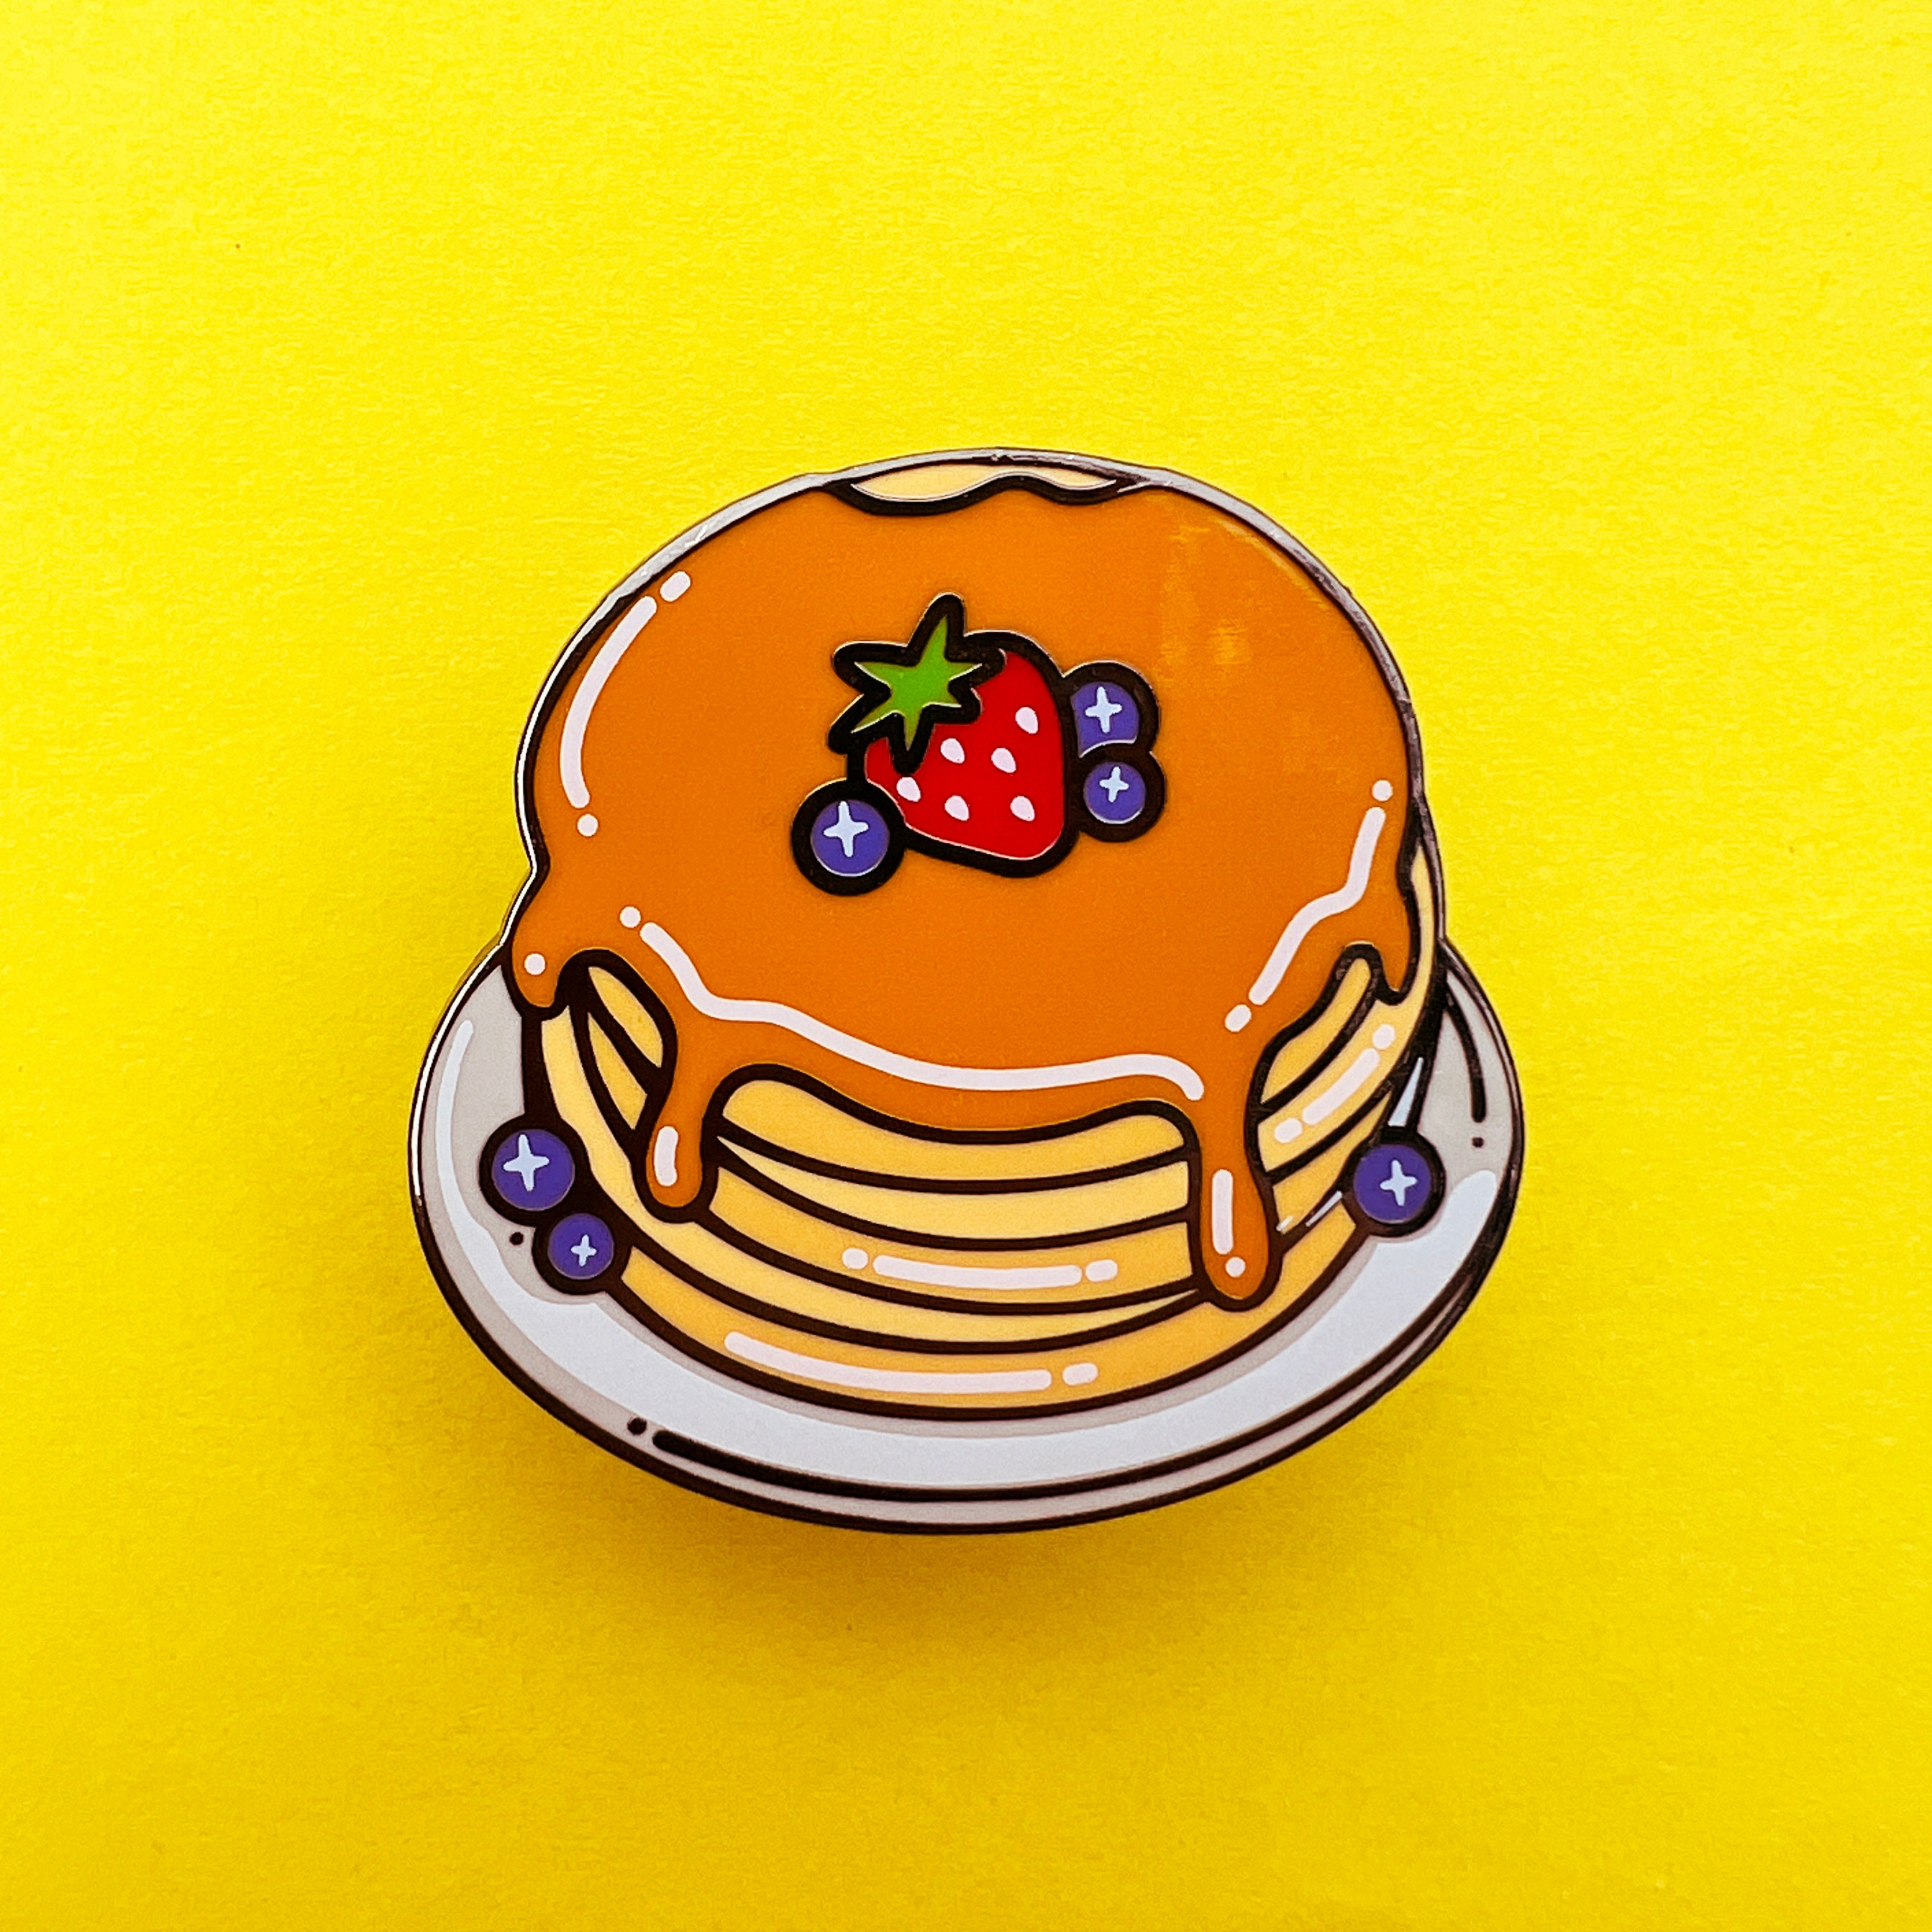 Pin de Bellismargarites en pancake